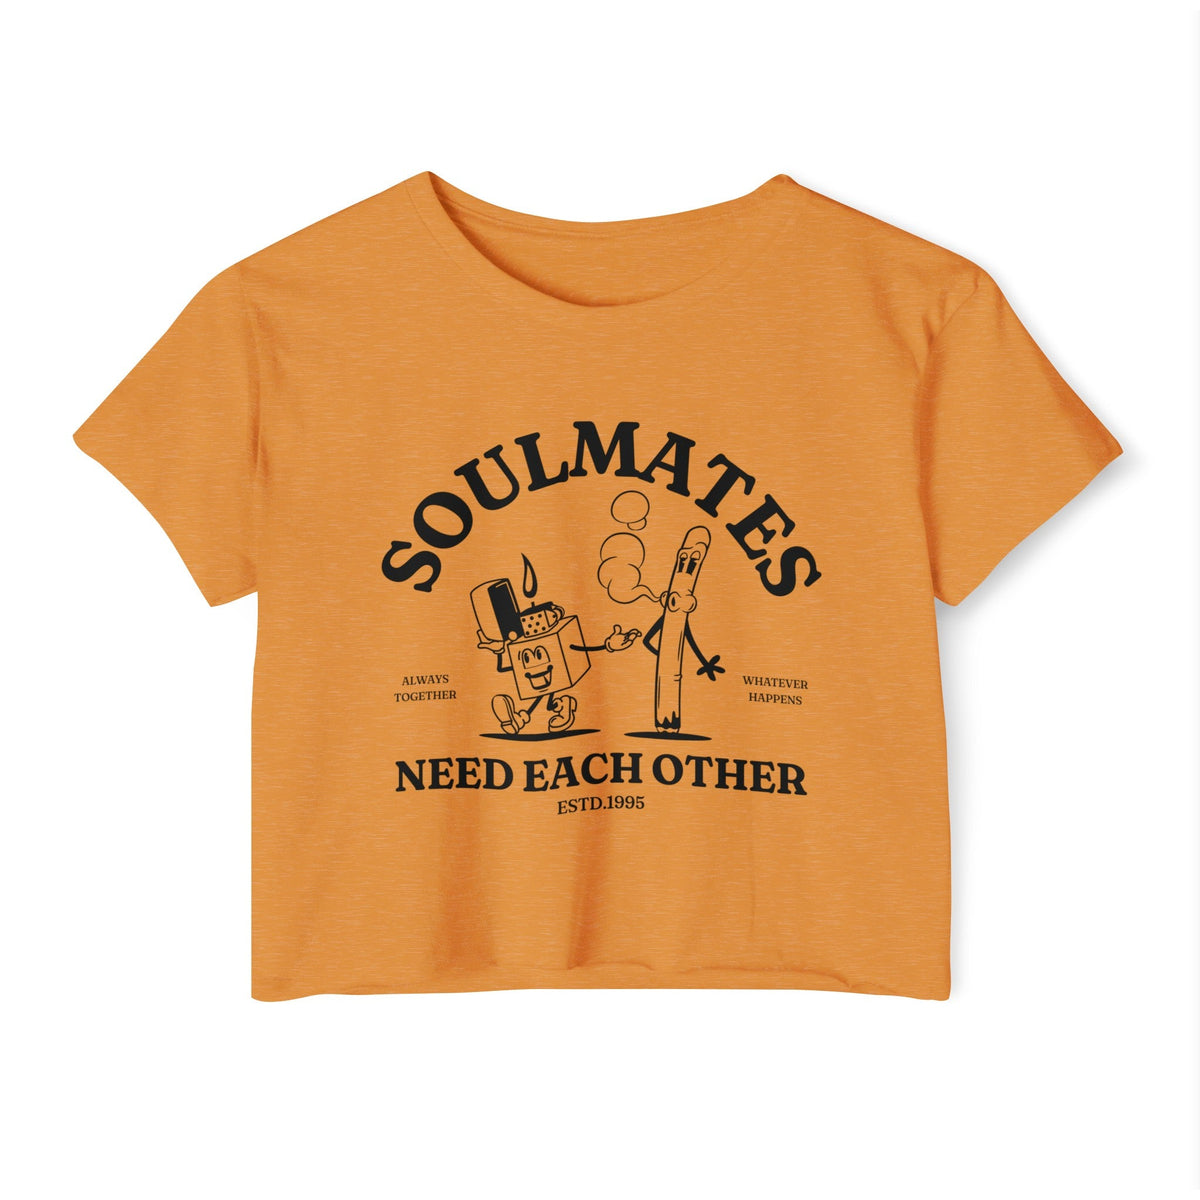 Soulmates Women's Crop Top - Goth Cloth Co.T - Shirt17189748970231812963